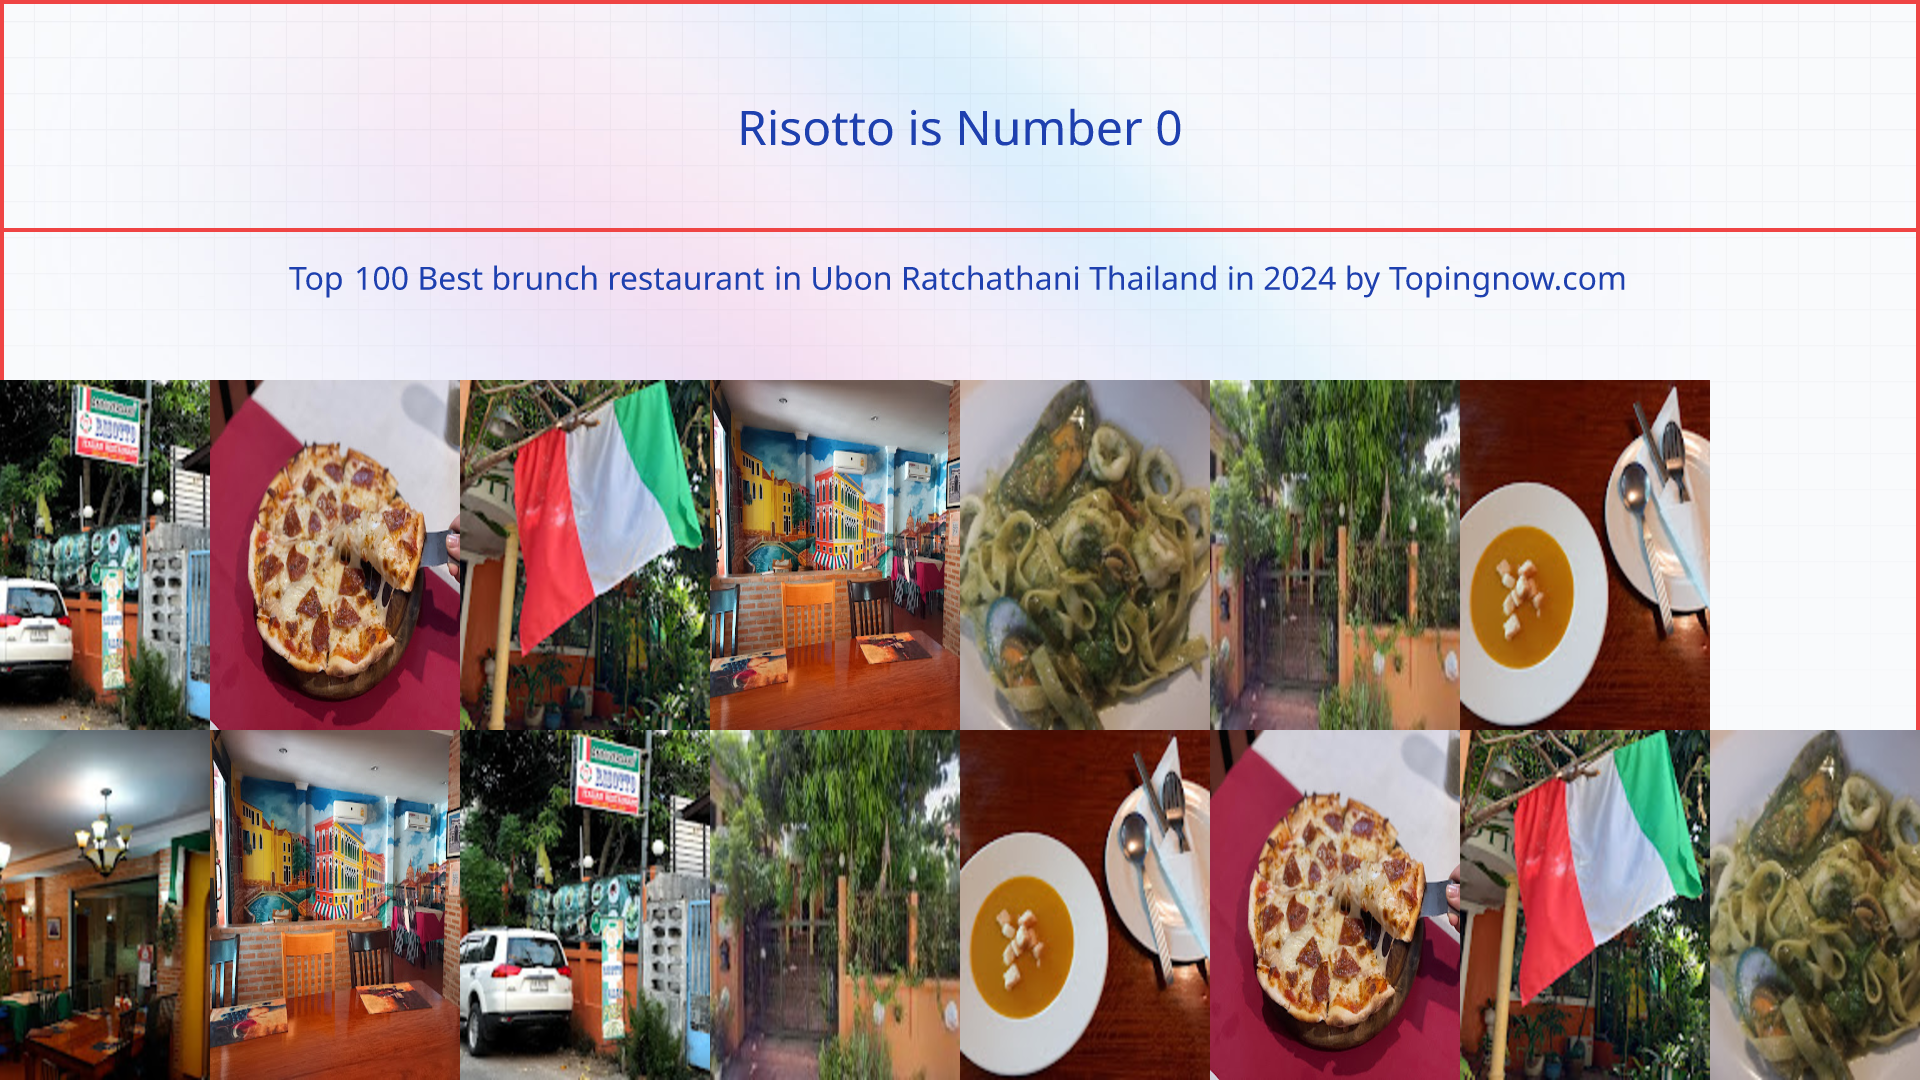 Risotto: Top 100 Best brunch restaurant in Ubon Ratchathani Thailand in 2024